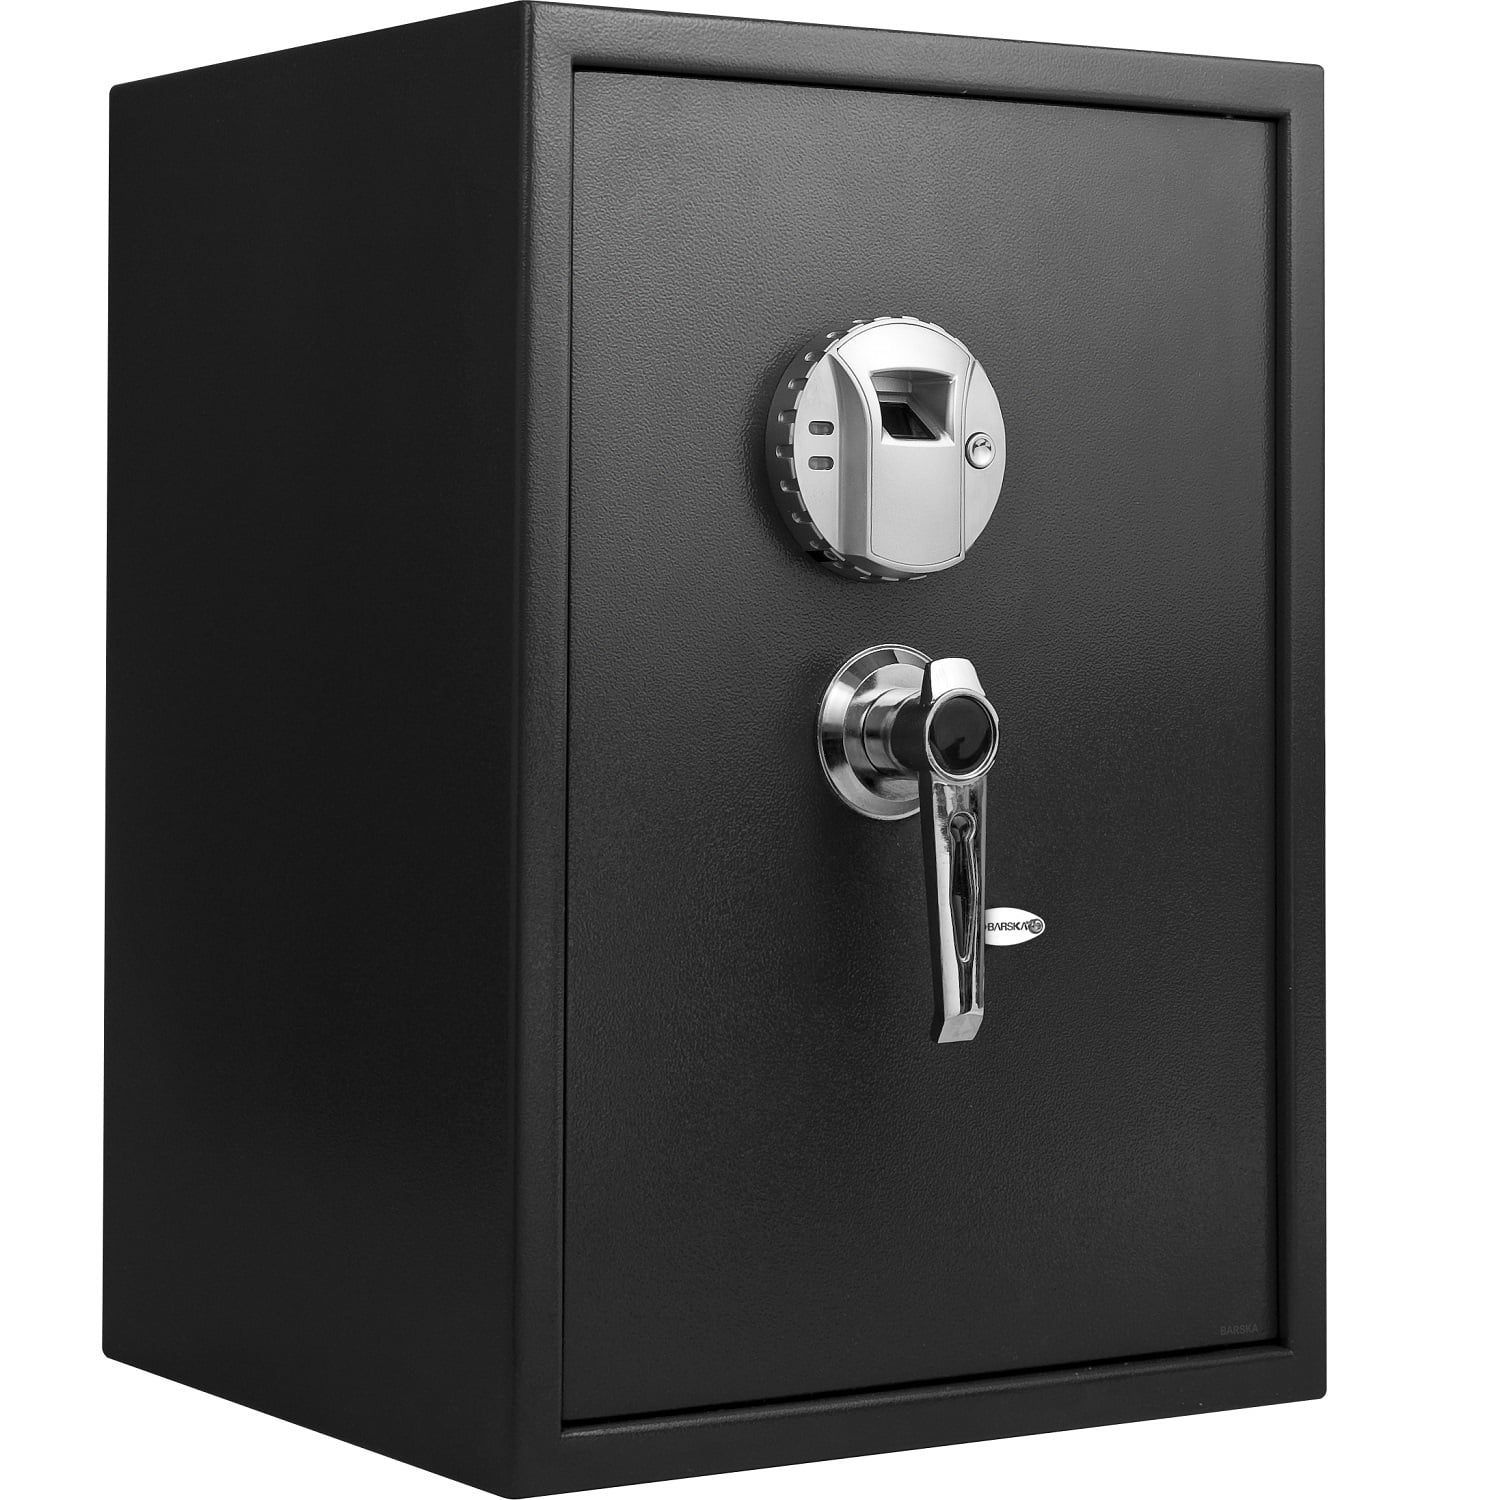 AX12038 Barska Biometric Wall Hidden Safe Fingerprint Lock Security Box 